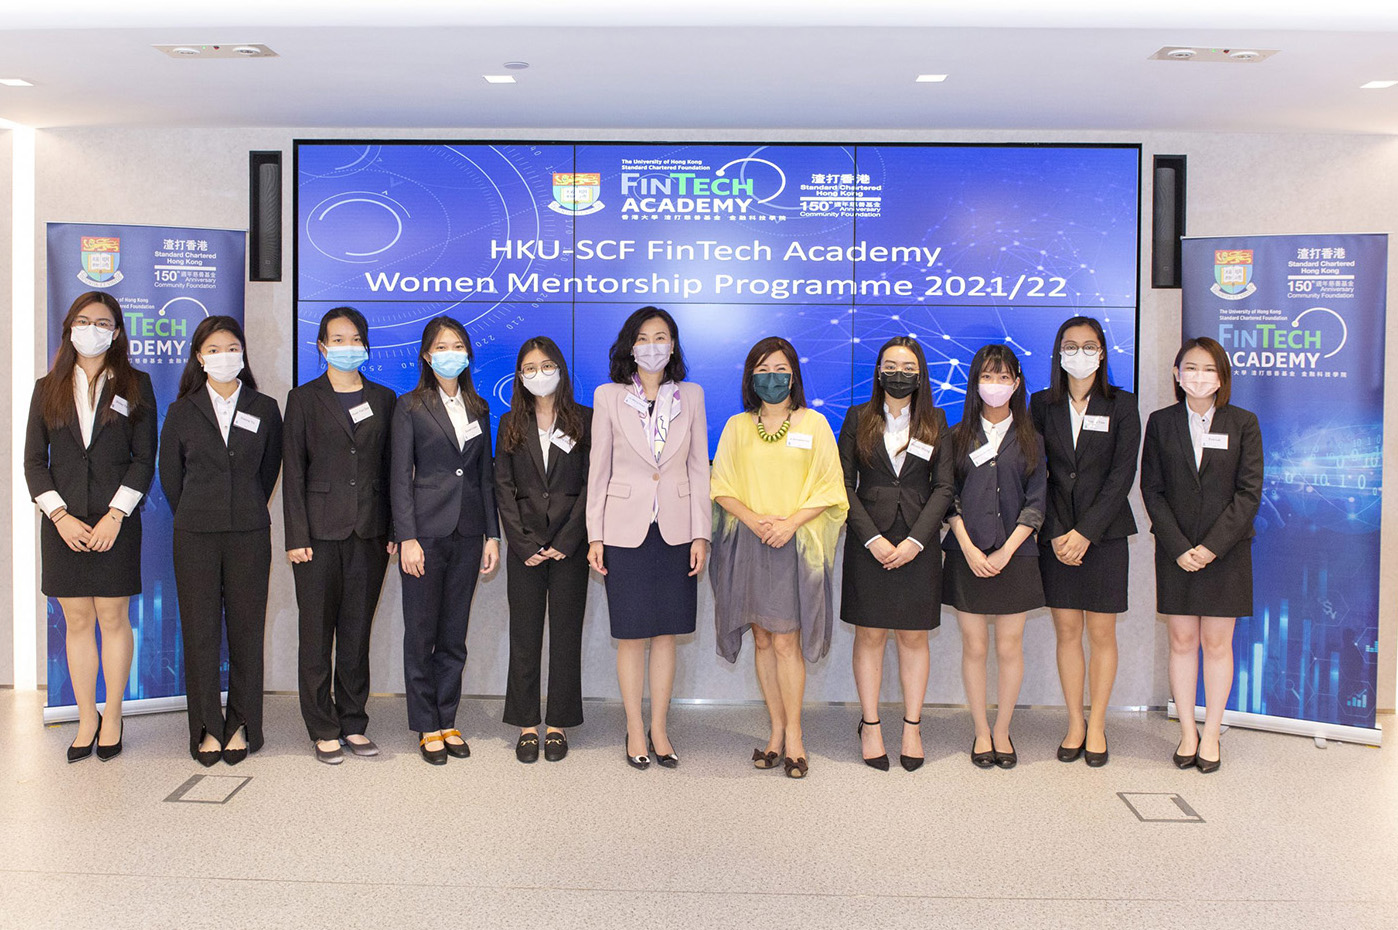 HKU-SCF FinTech Academy Women Mentorship Programme 2021/22